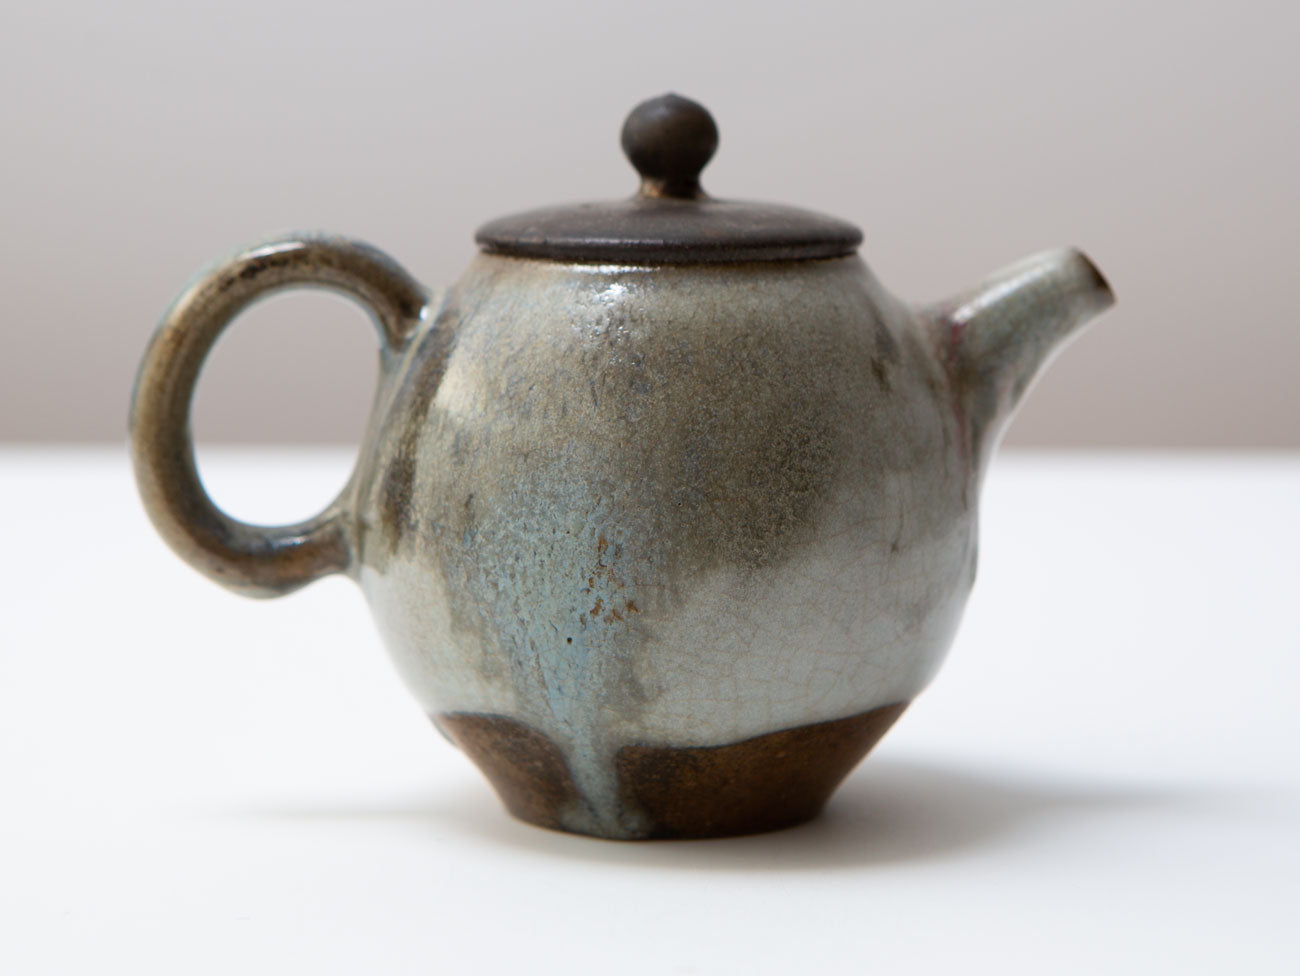 Marine. A wood-fired teapot. Liao Guo Hua